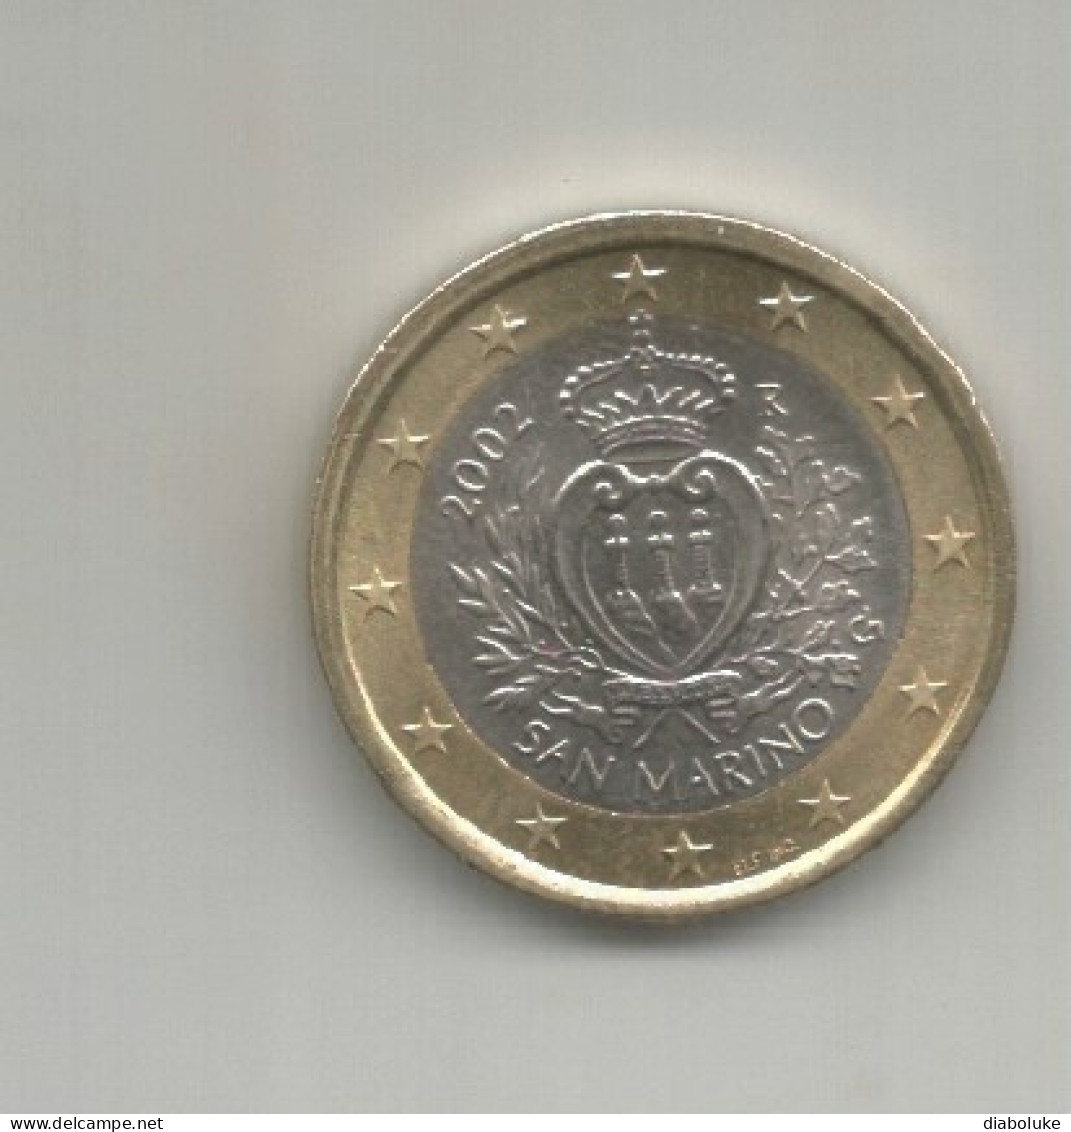 (SAN MARINO) 2002, 1 EURO - Circulated Coin - San Marino